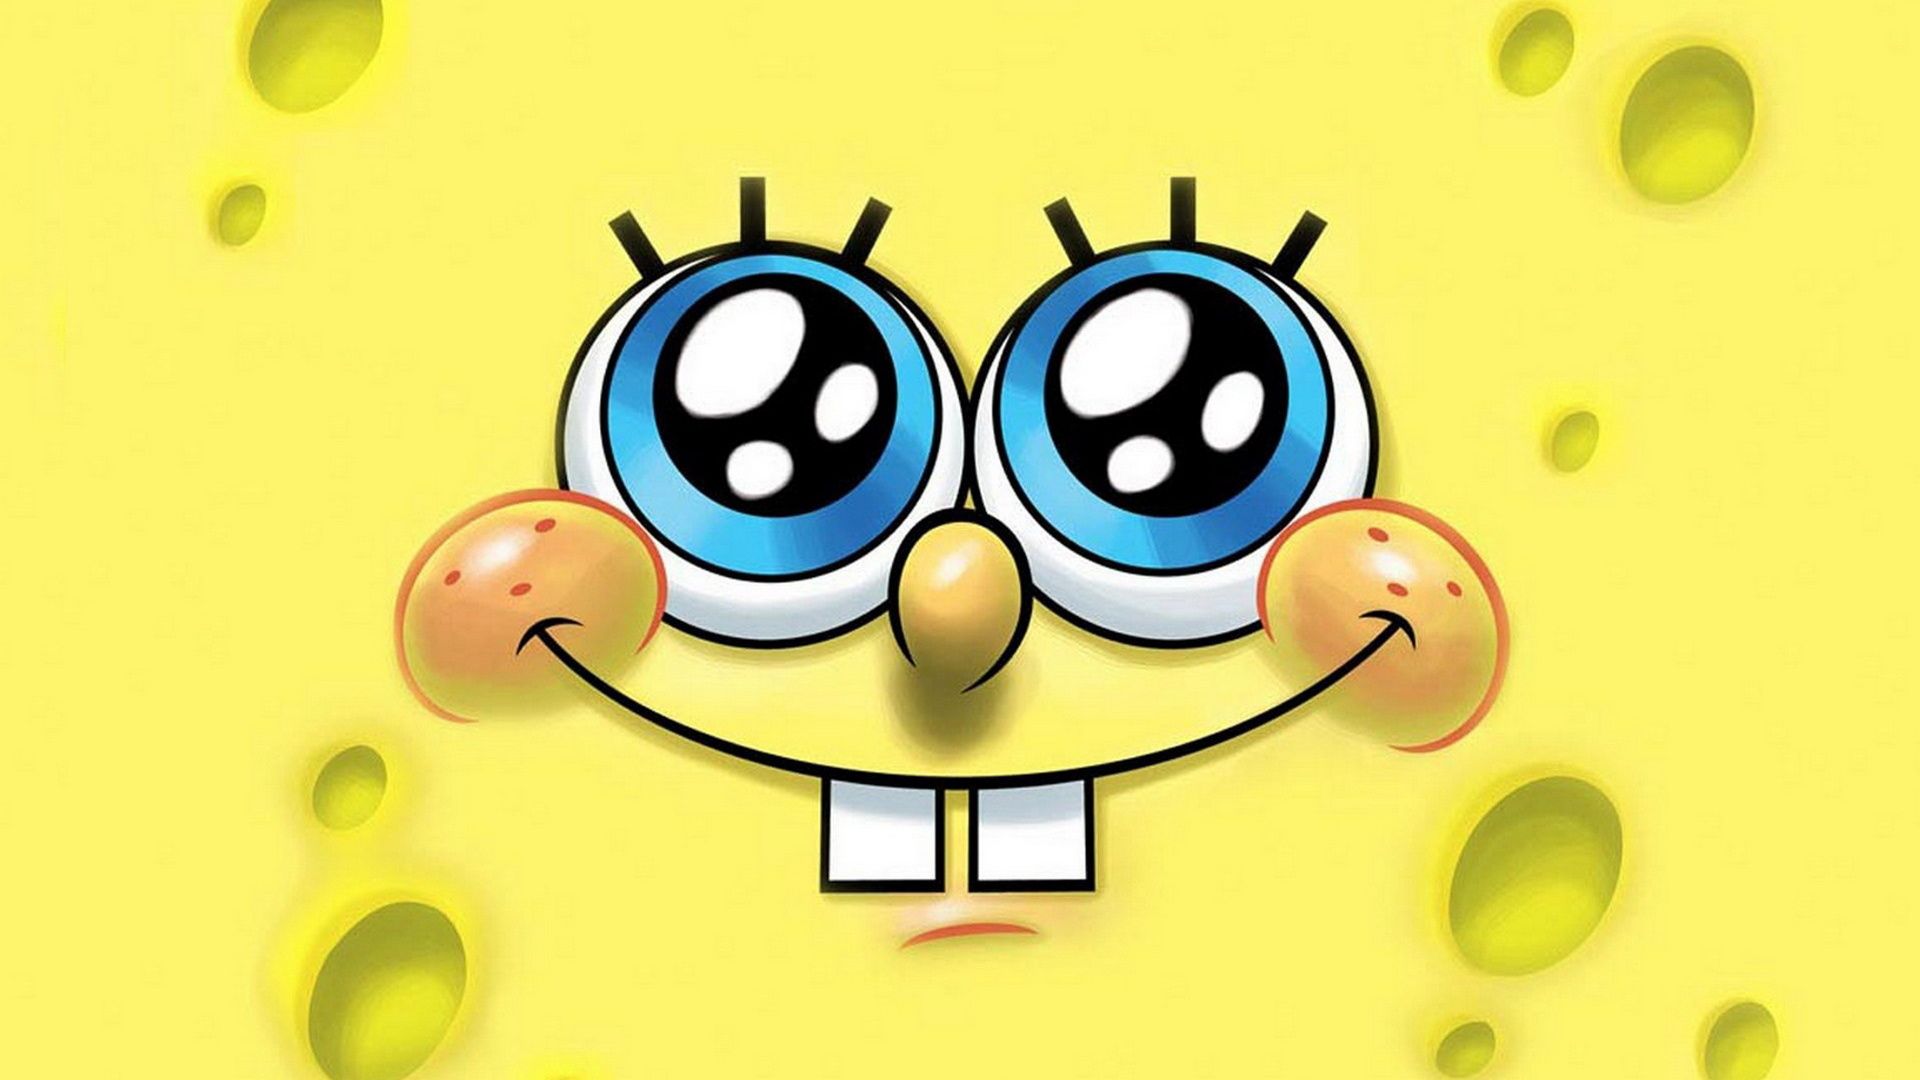 SpongeBob SquarePants Wallpaper Images Background - Ehiyo.com